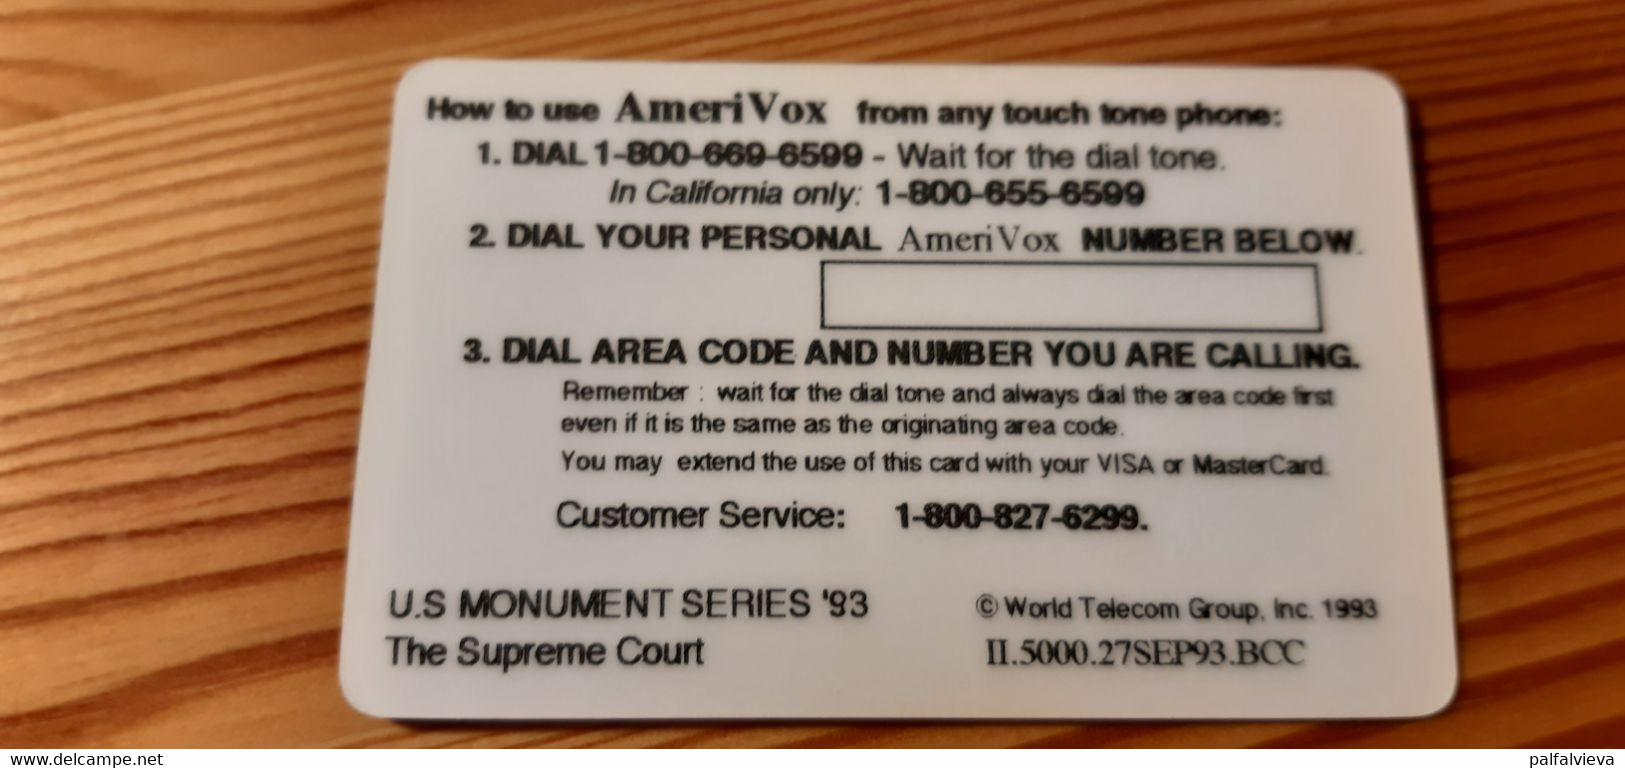 Prepaid Phonecard USA - AmeriVox - The Supreme Court - Amerivox